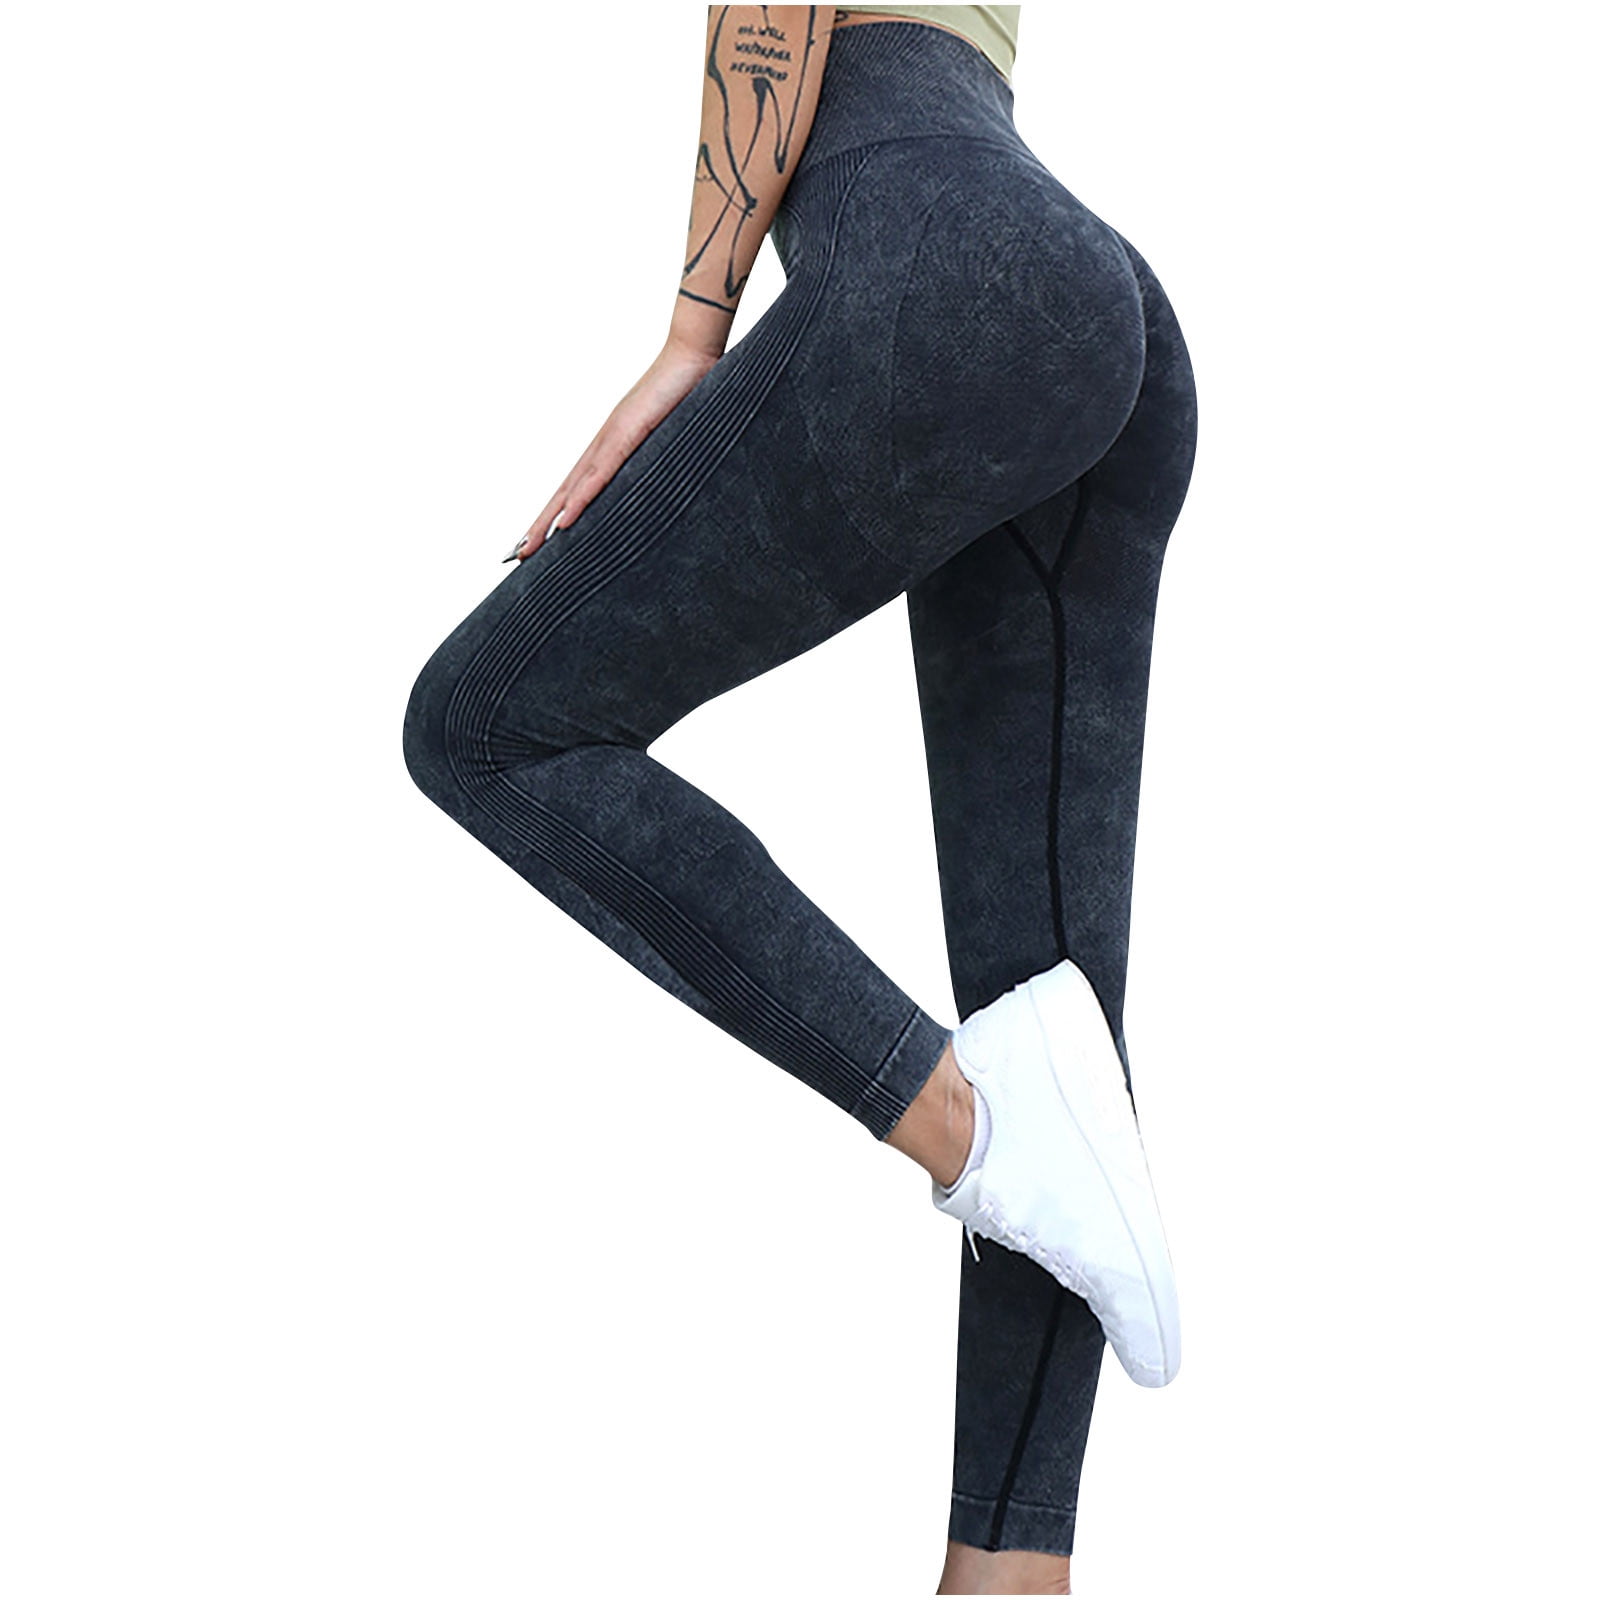 JWZUY Women's Seamless Workout Pants High Waist and Hip Lifting